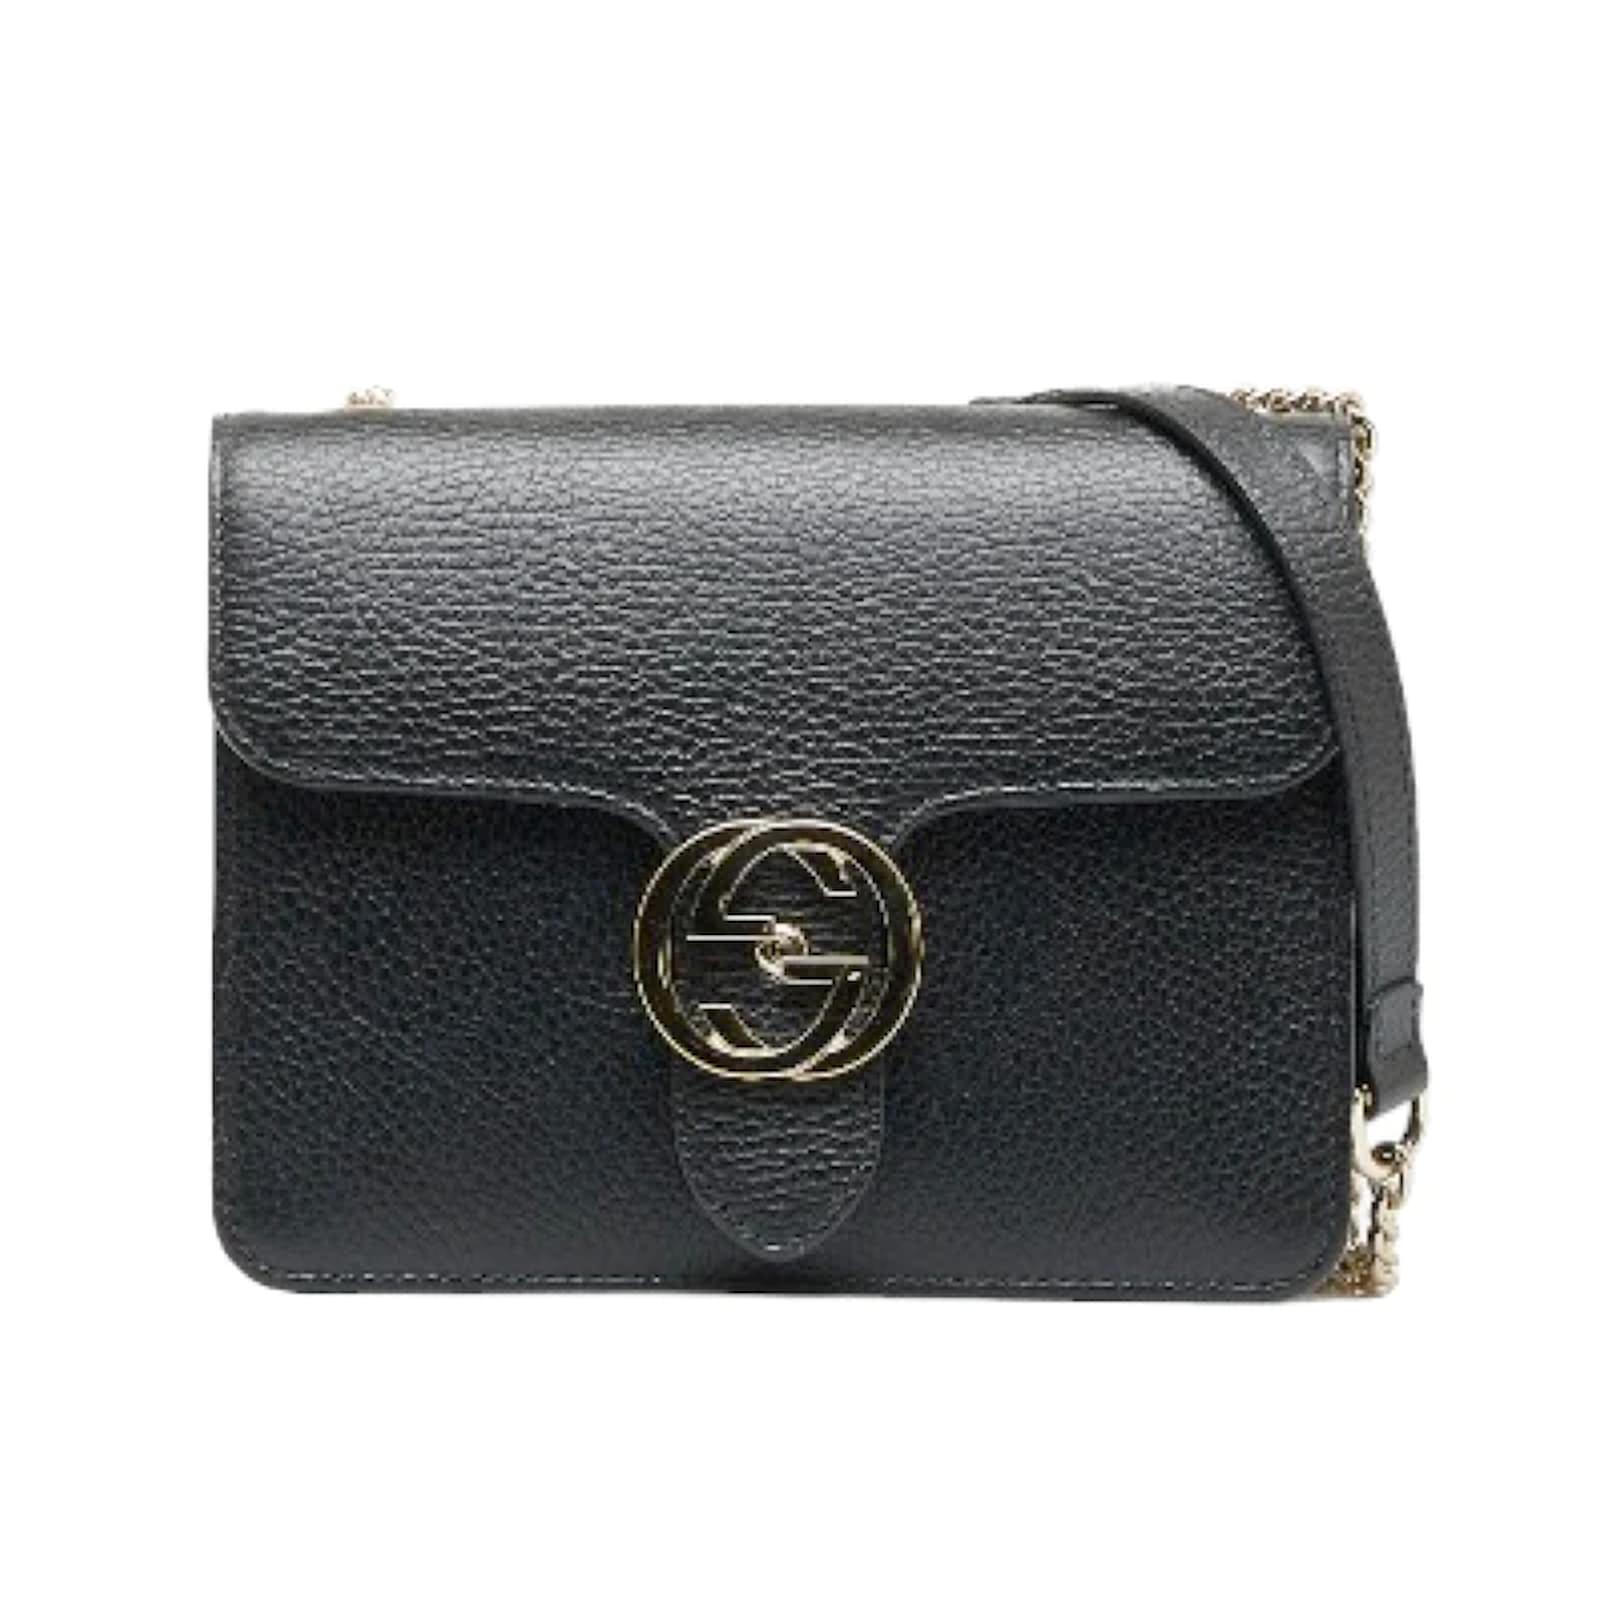 Gucci Black Leather Marmont Interlocking GG Crossbody Bag